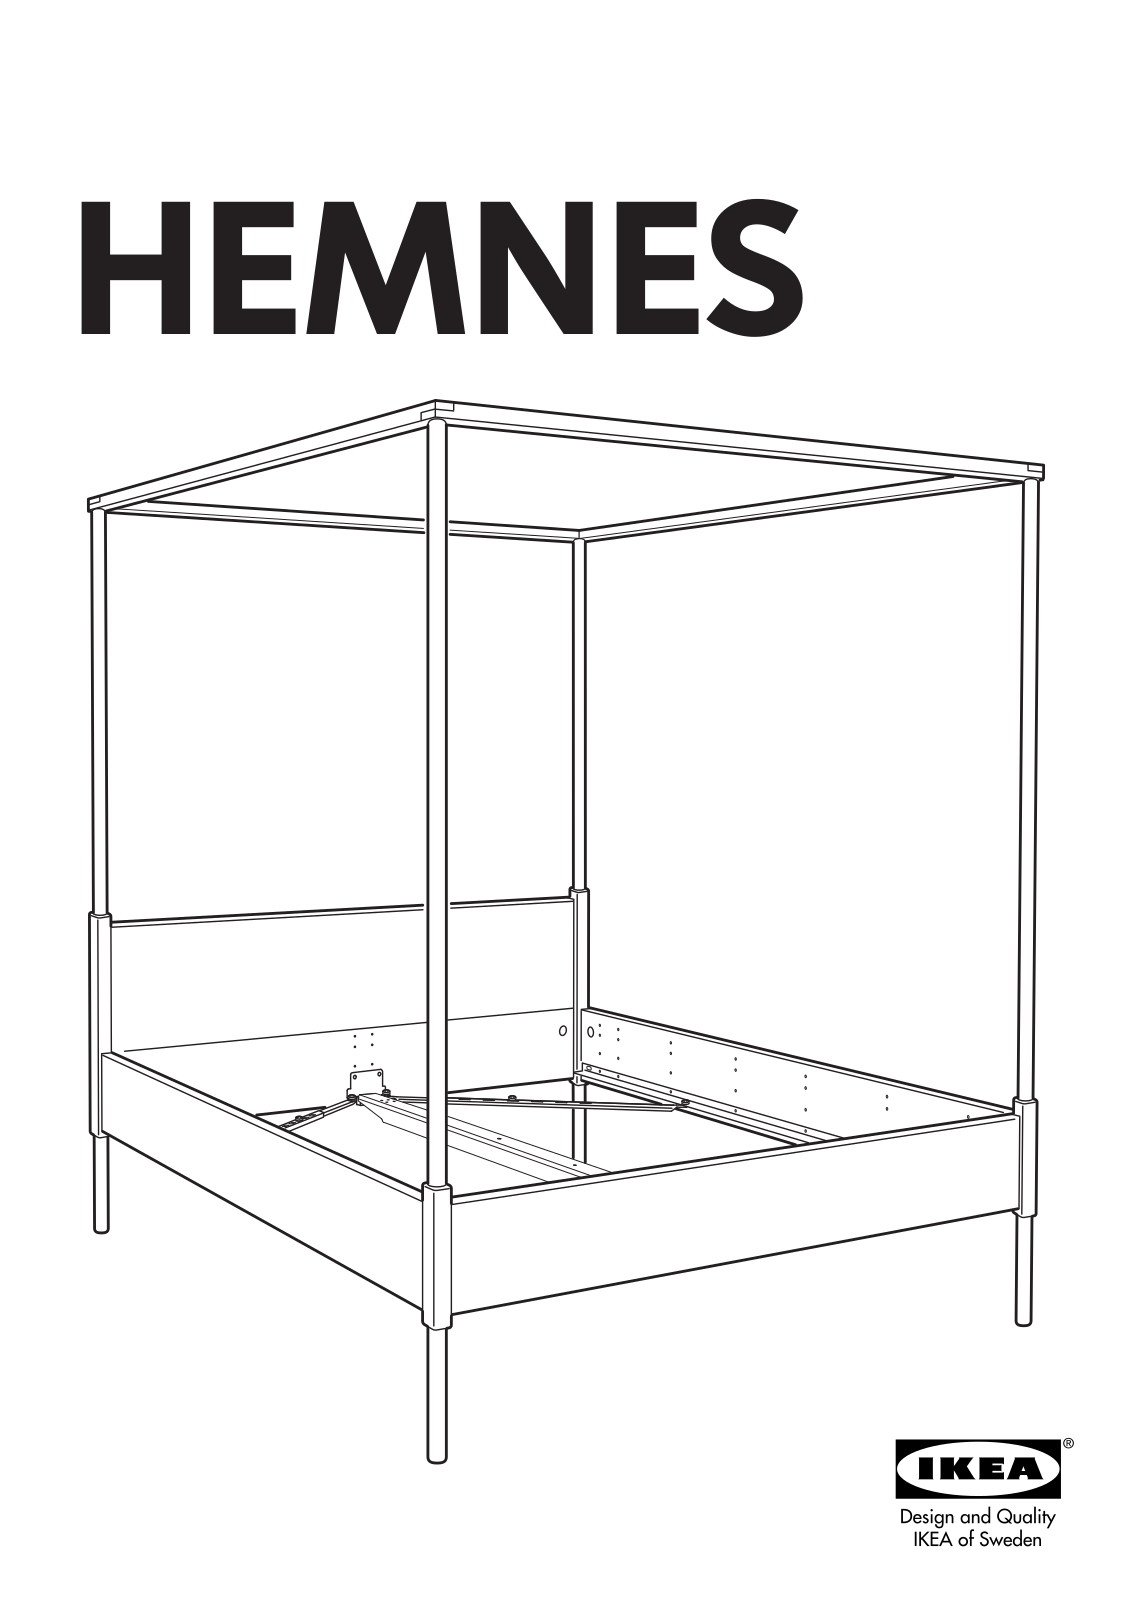 IKEA HEMNES 4POSTER BED FRAME QUEEN, HEMNES 4 POSTER BED FRAME FULL-DOUBLE Assembly Instruction